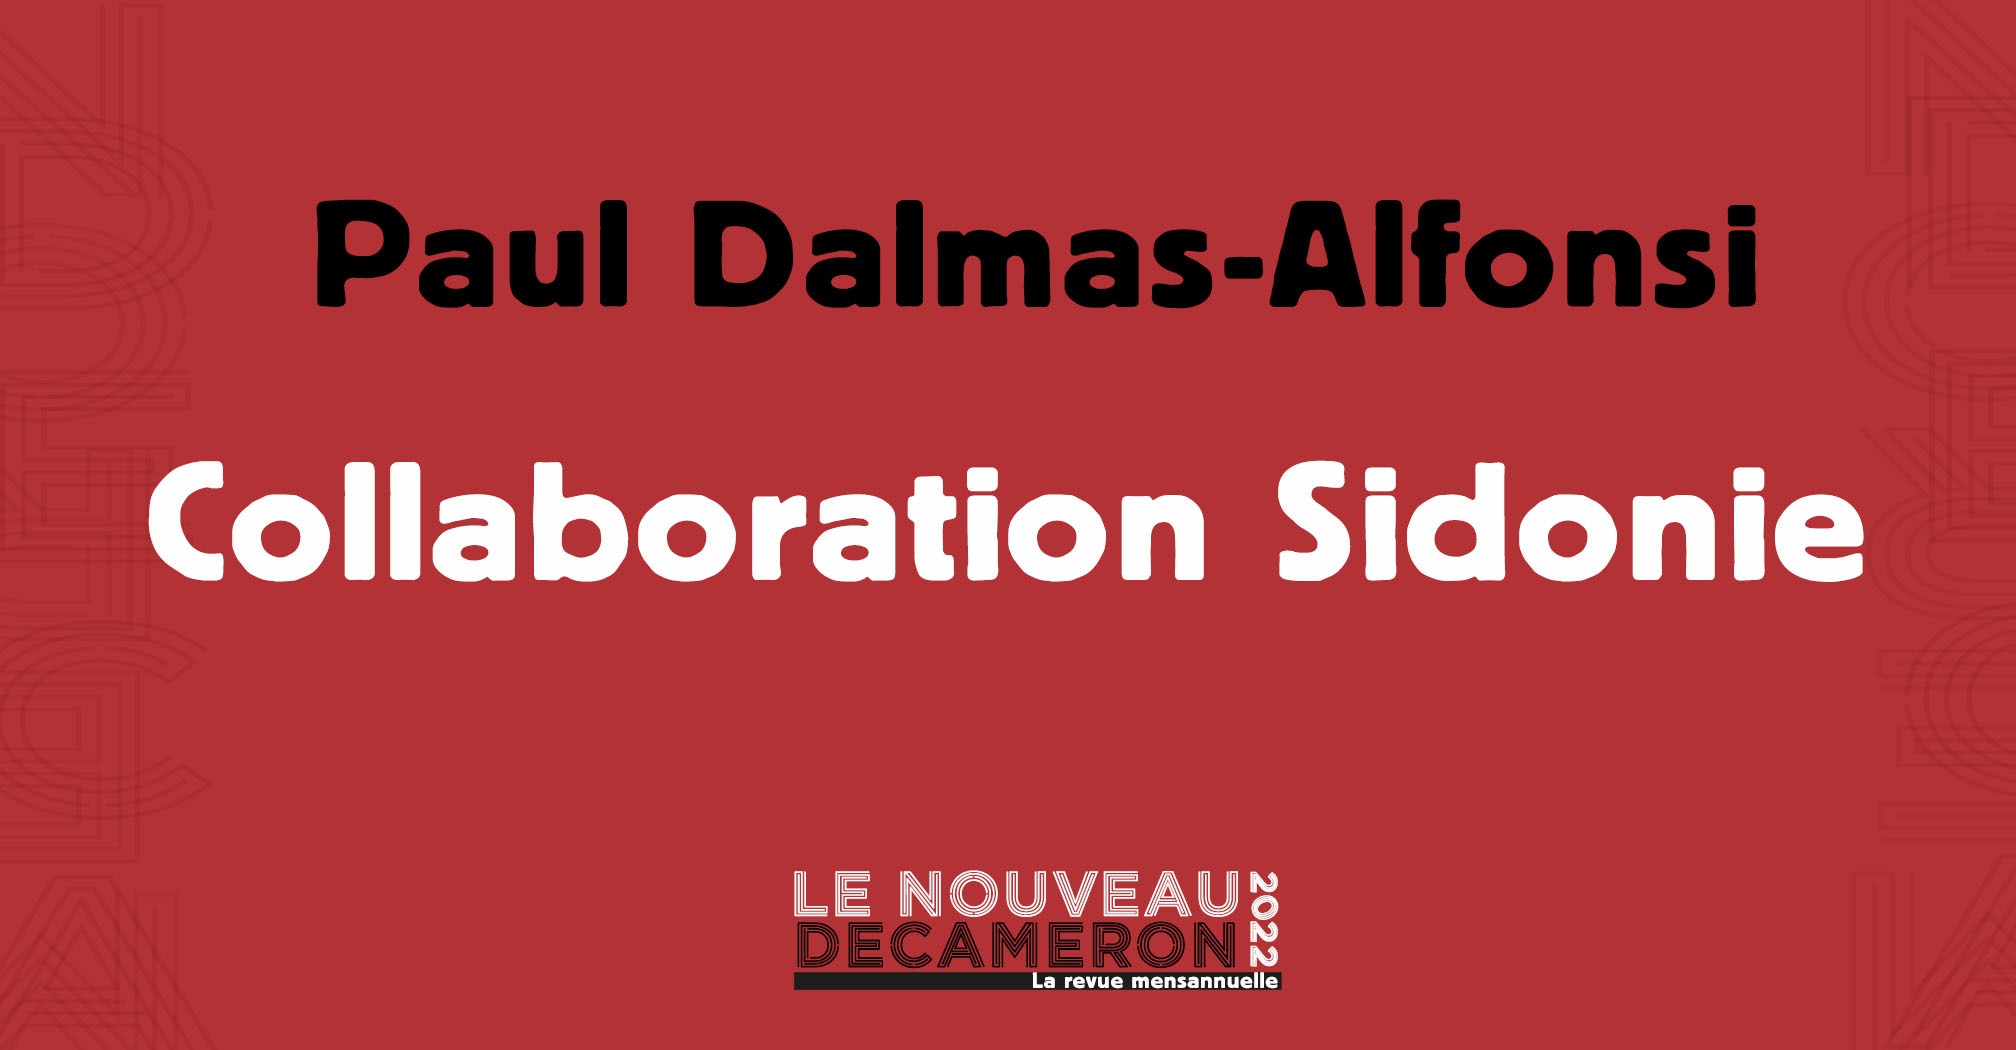 Paul Dalmas-Alfonsi - Collaboration Sidonie